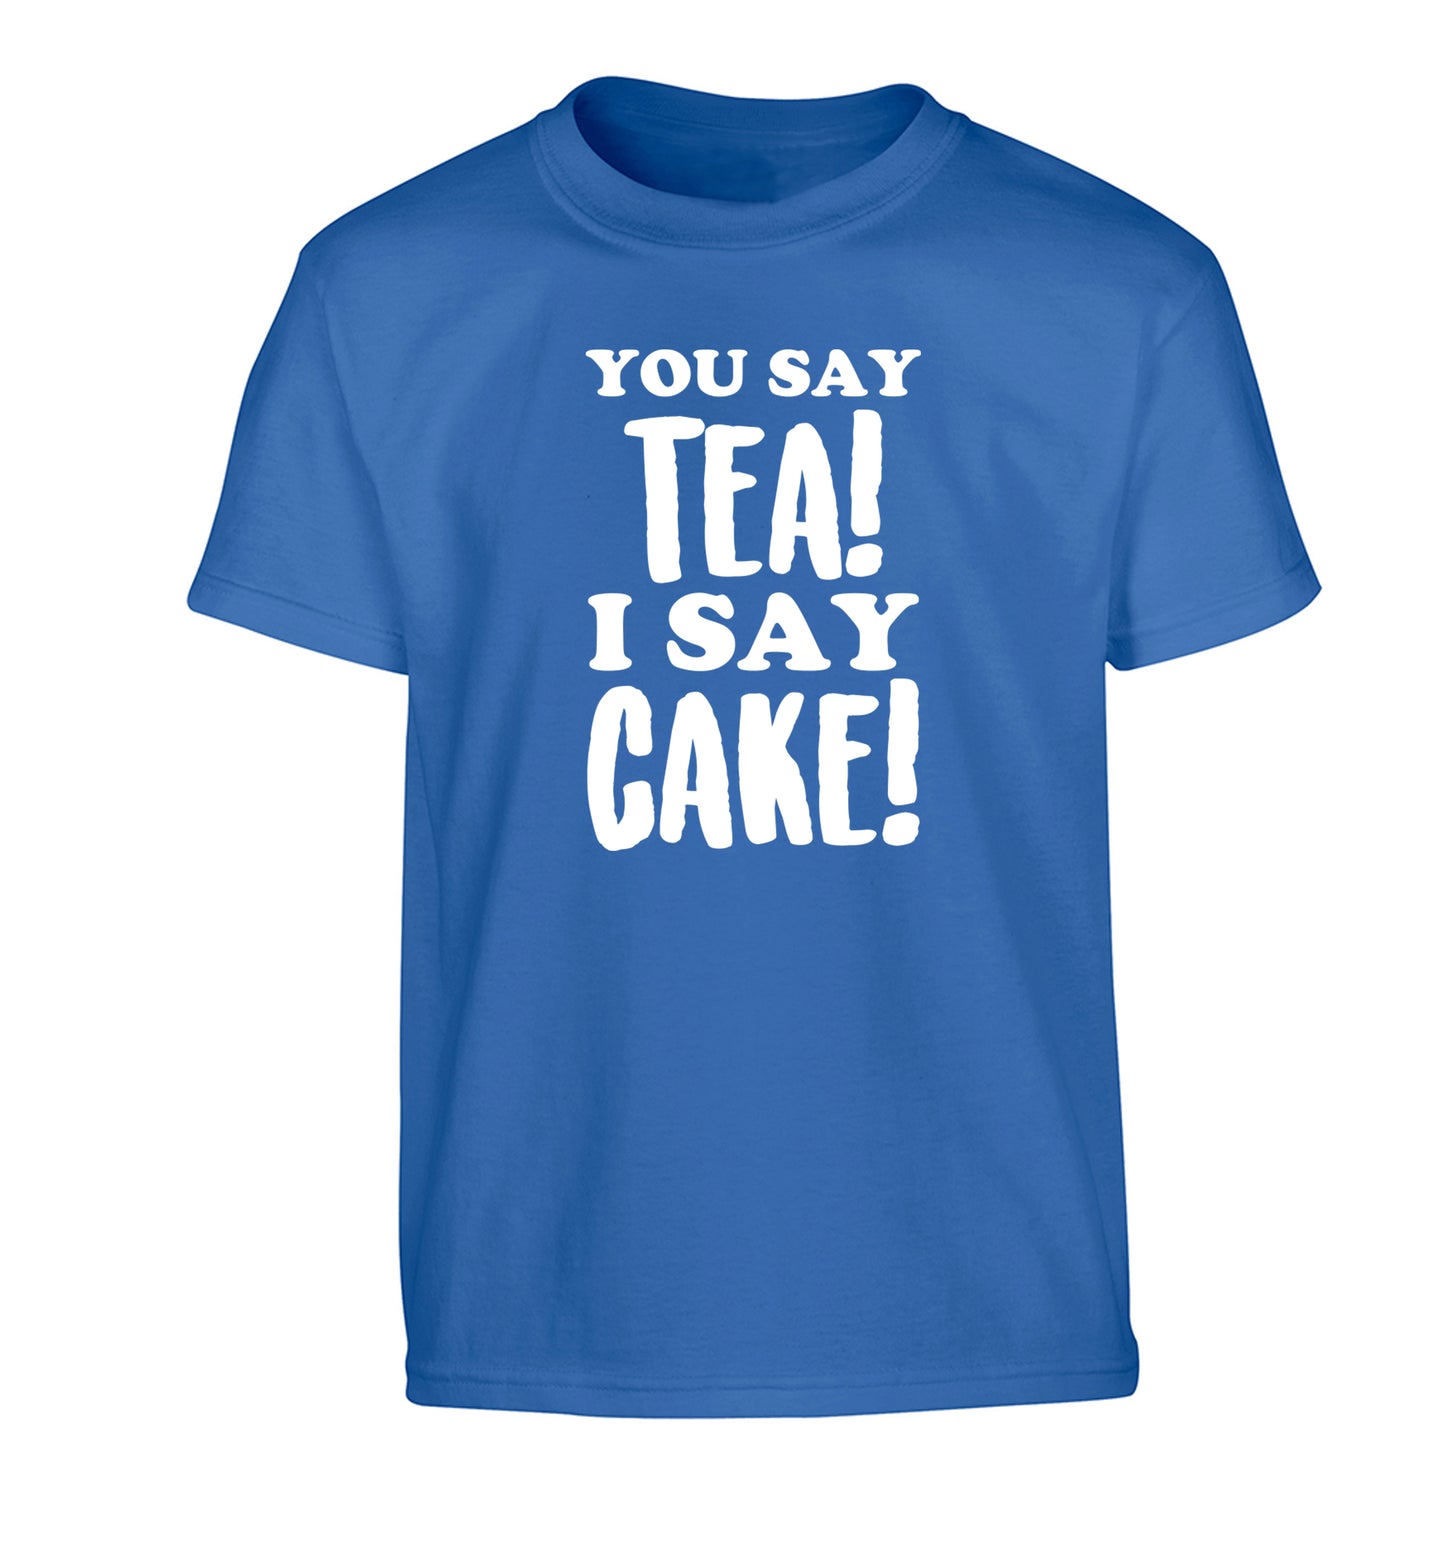 You say tea I say cake! Children's blue Tshirt 12-14 Years